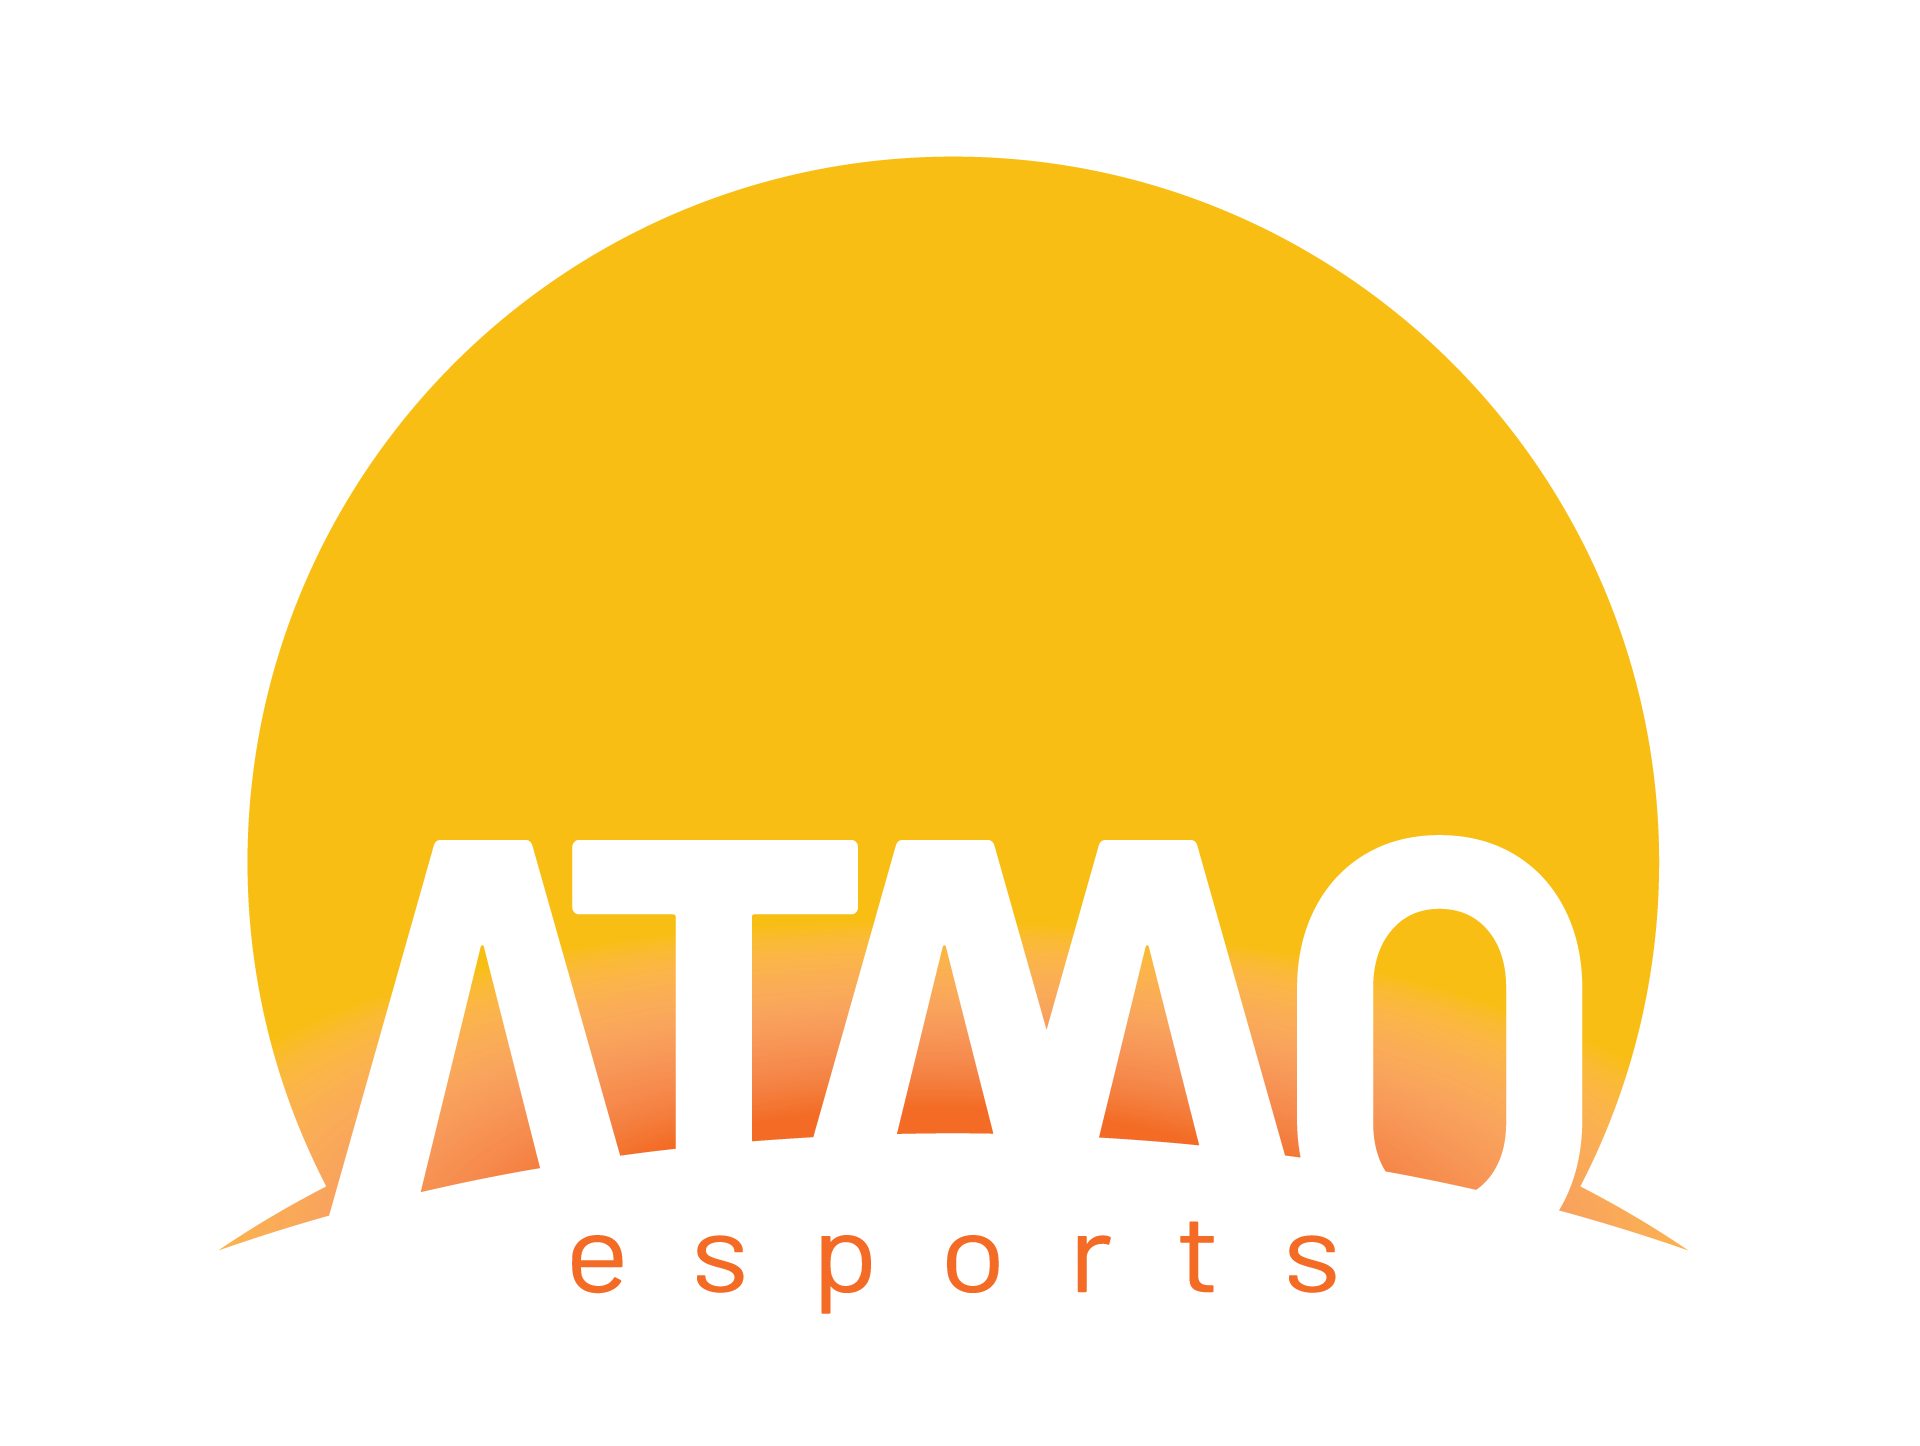 ATMO esports logo